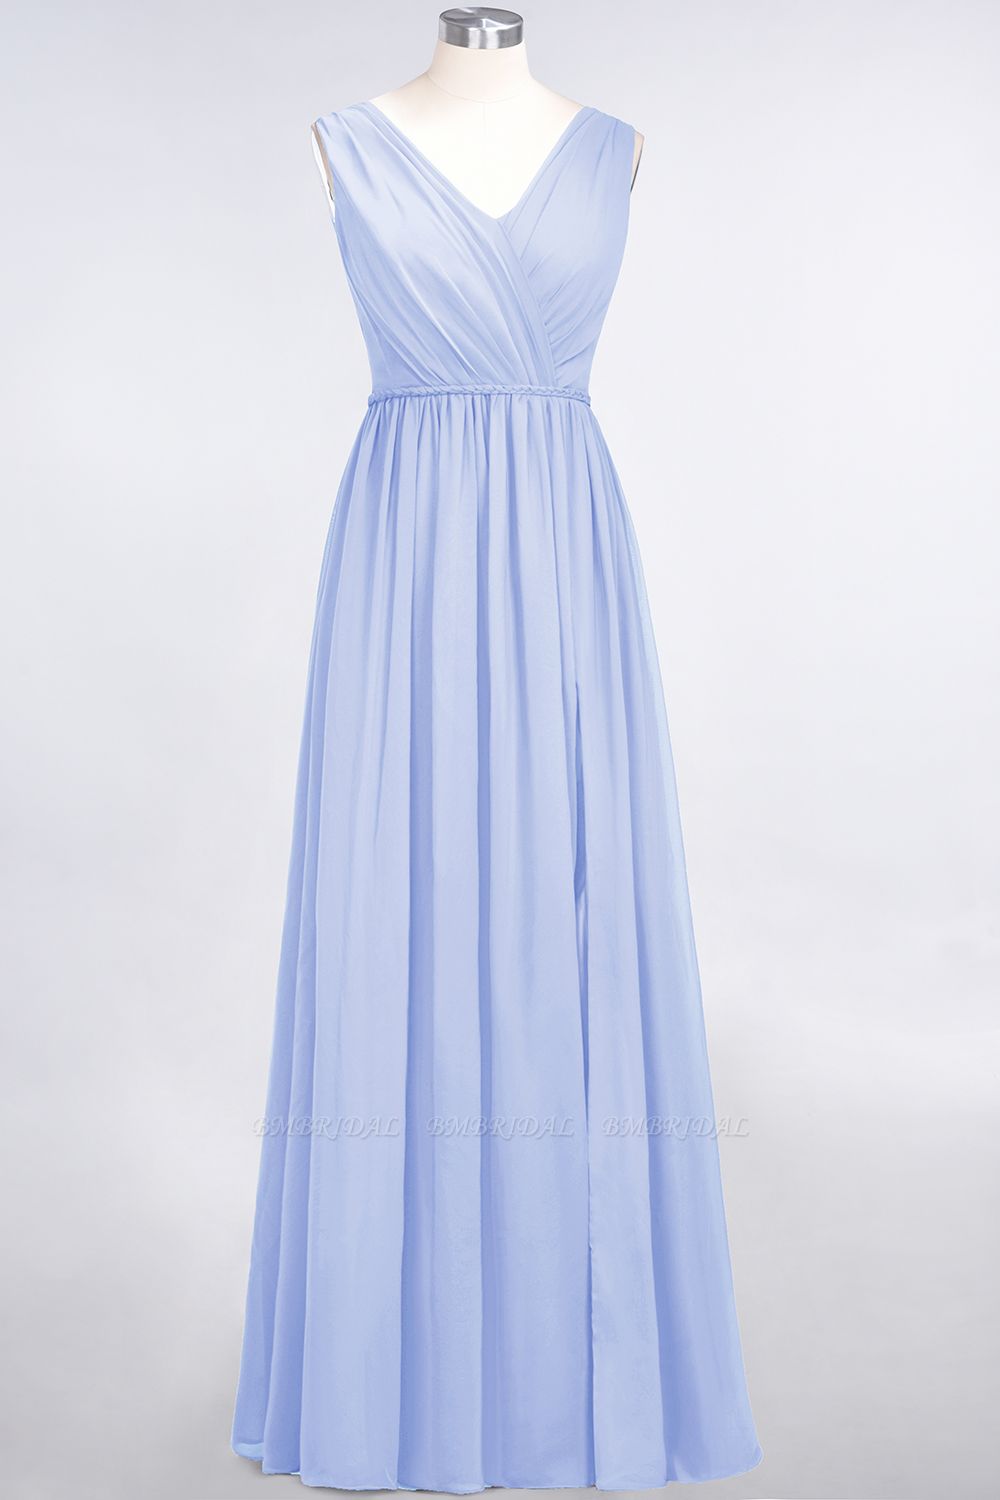 BMbridal Glamorous TulleV-Neck Ruffle Burgundy Bridesmaid Dress Online